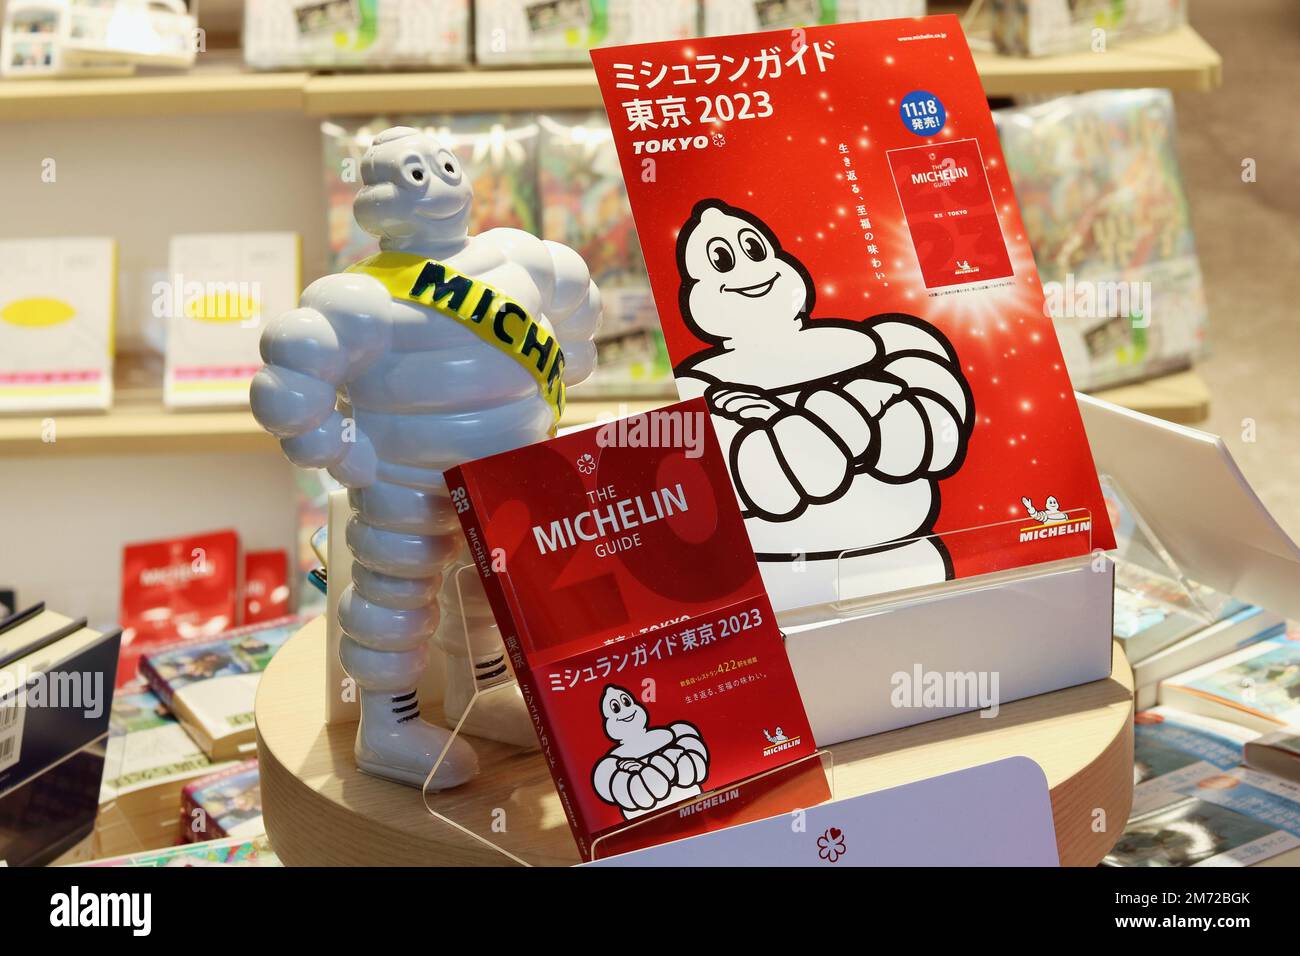 TOKYO, JAPAN - November 24, 2022: Display promoting the Michelin Guide Tokyo 2023 featuring a Michelin Man in Kinokuniya book Stock Photo